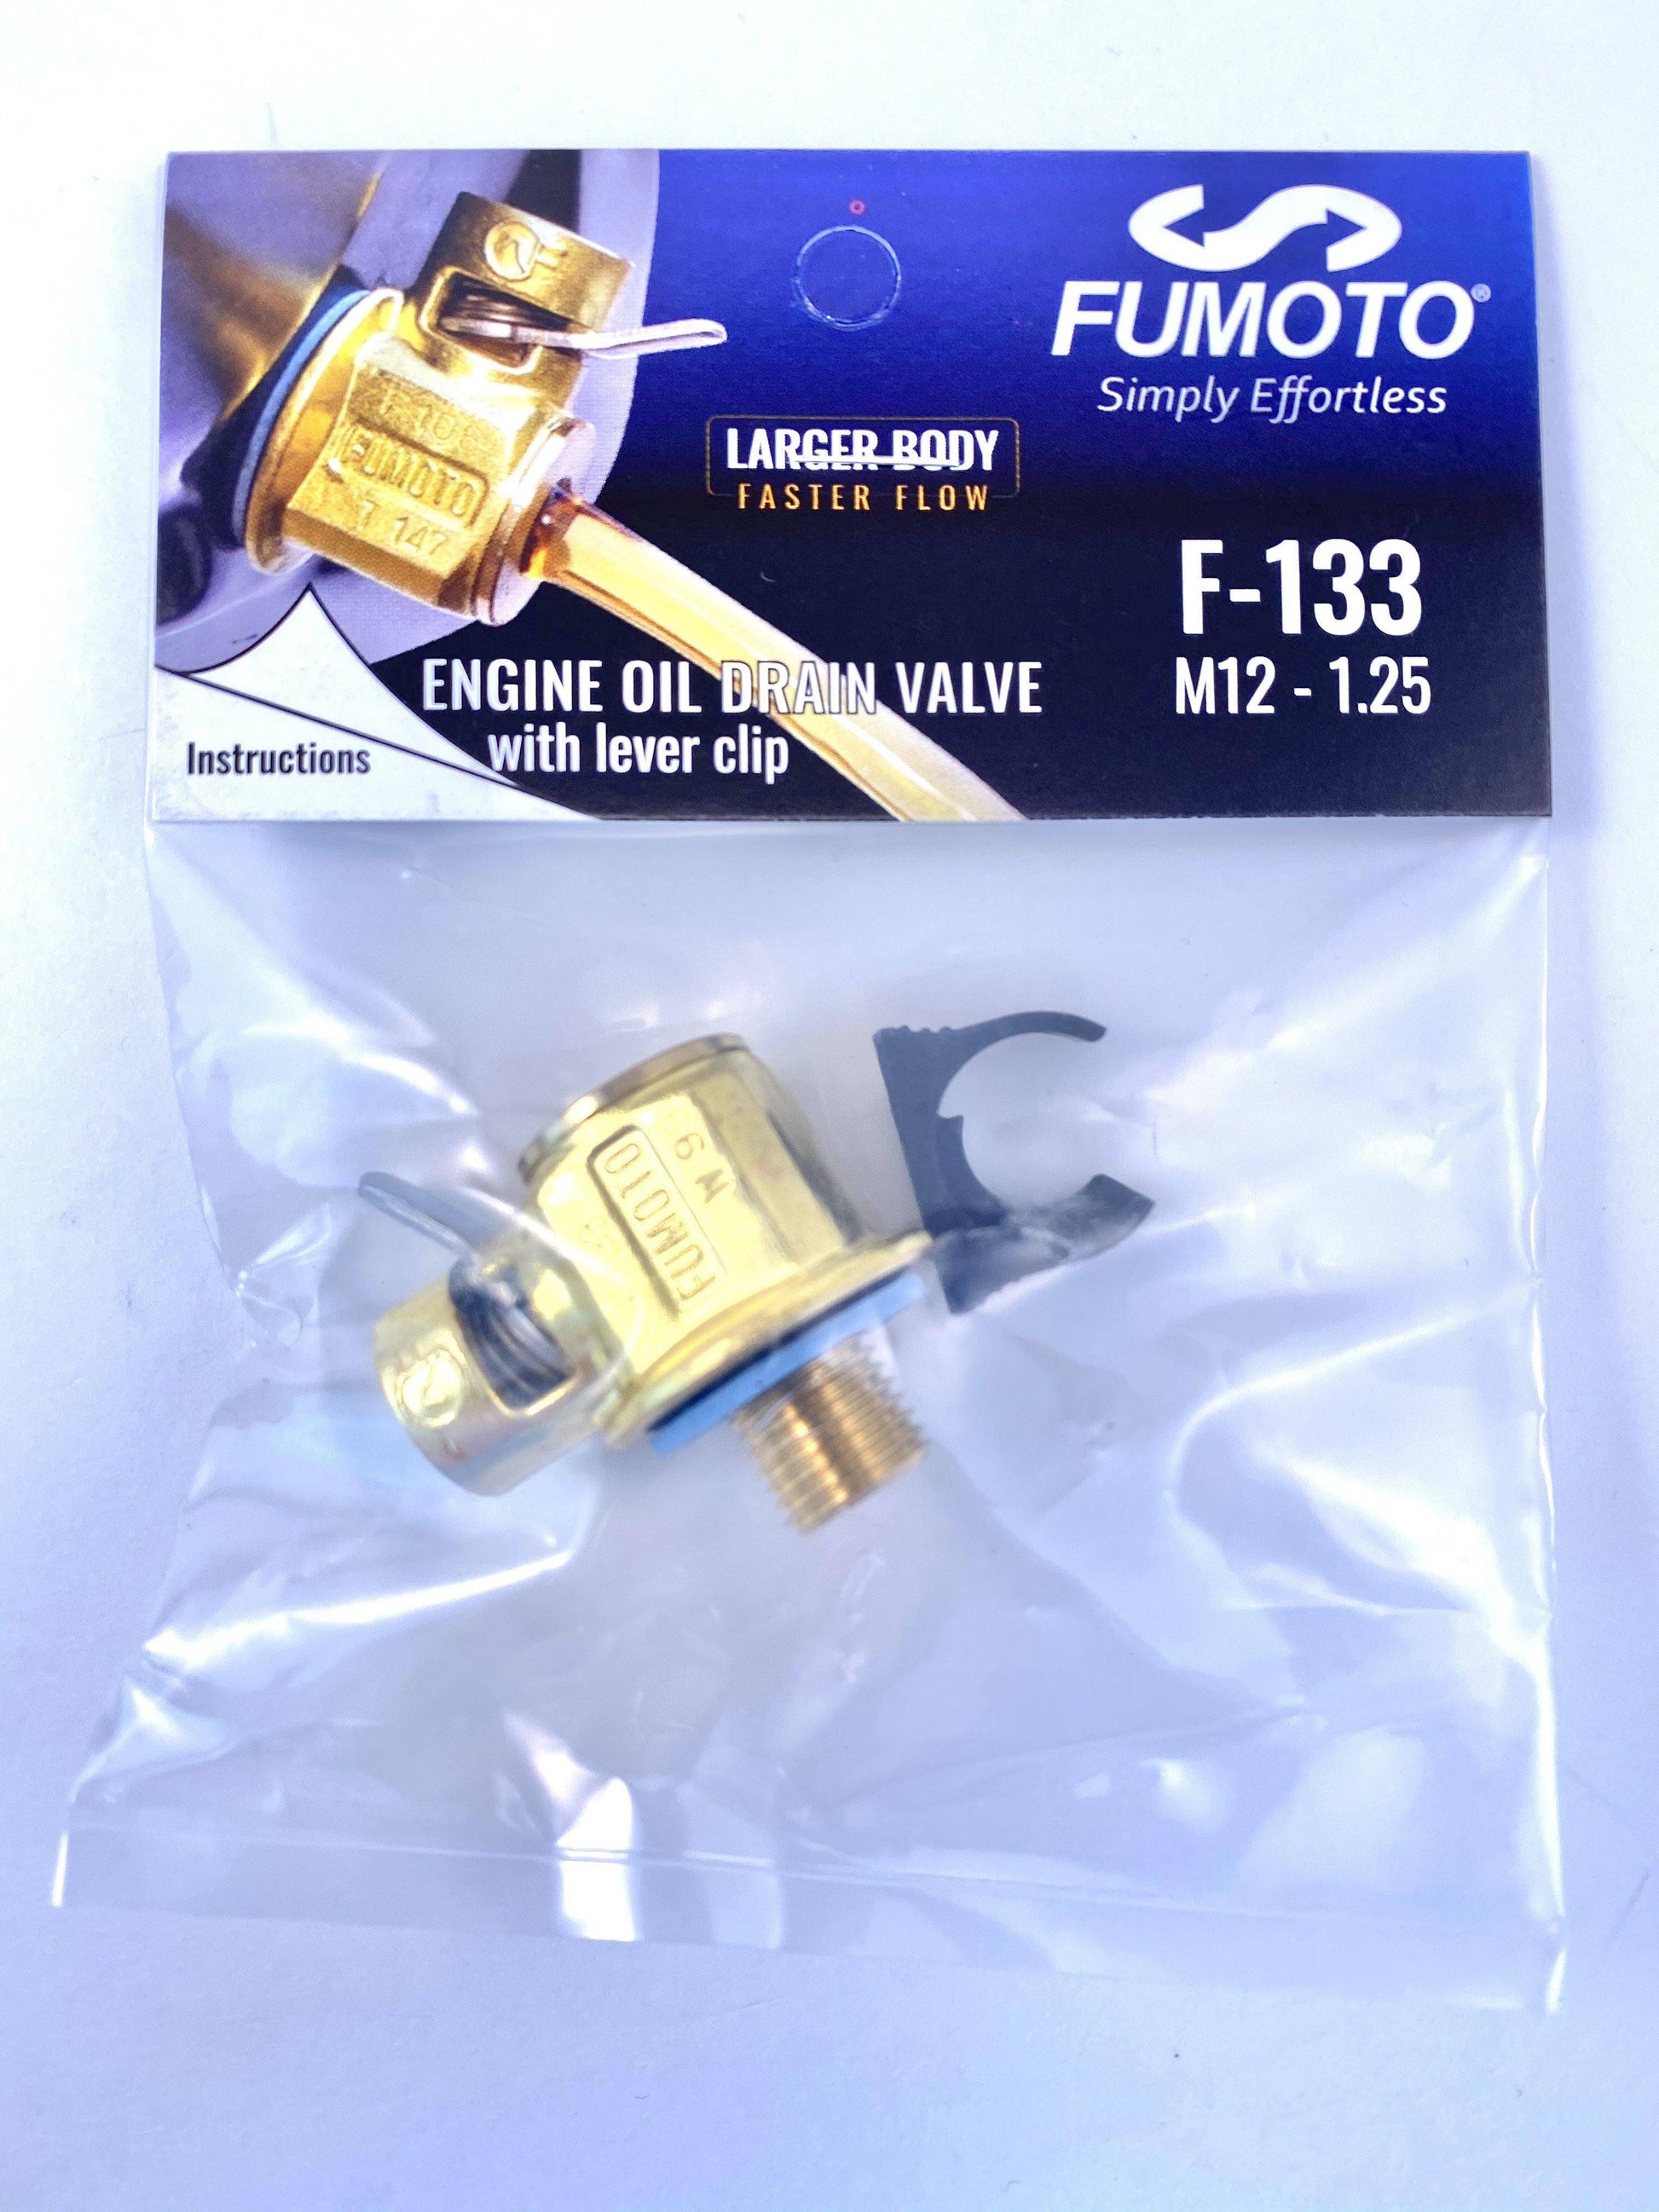 Fumoto® Engine Oil Drain Valve for Toyotas - Mid-Atlantic Off-Roading